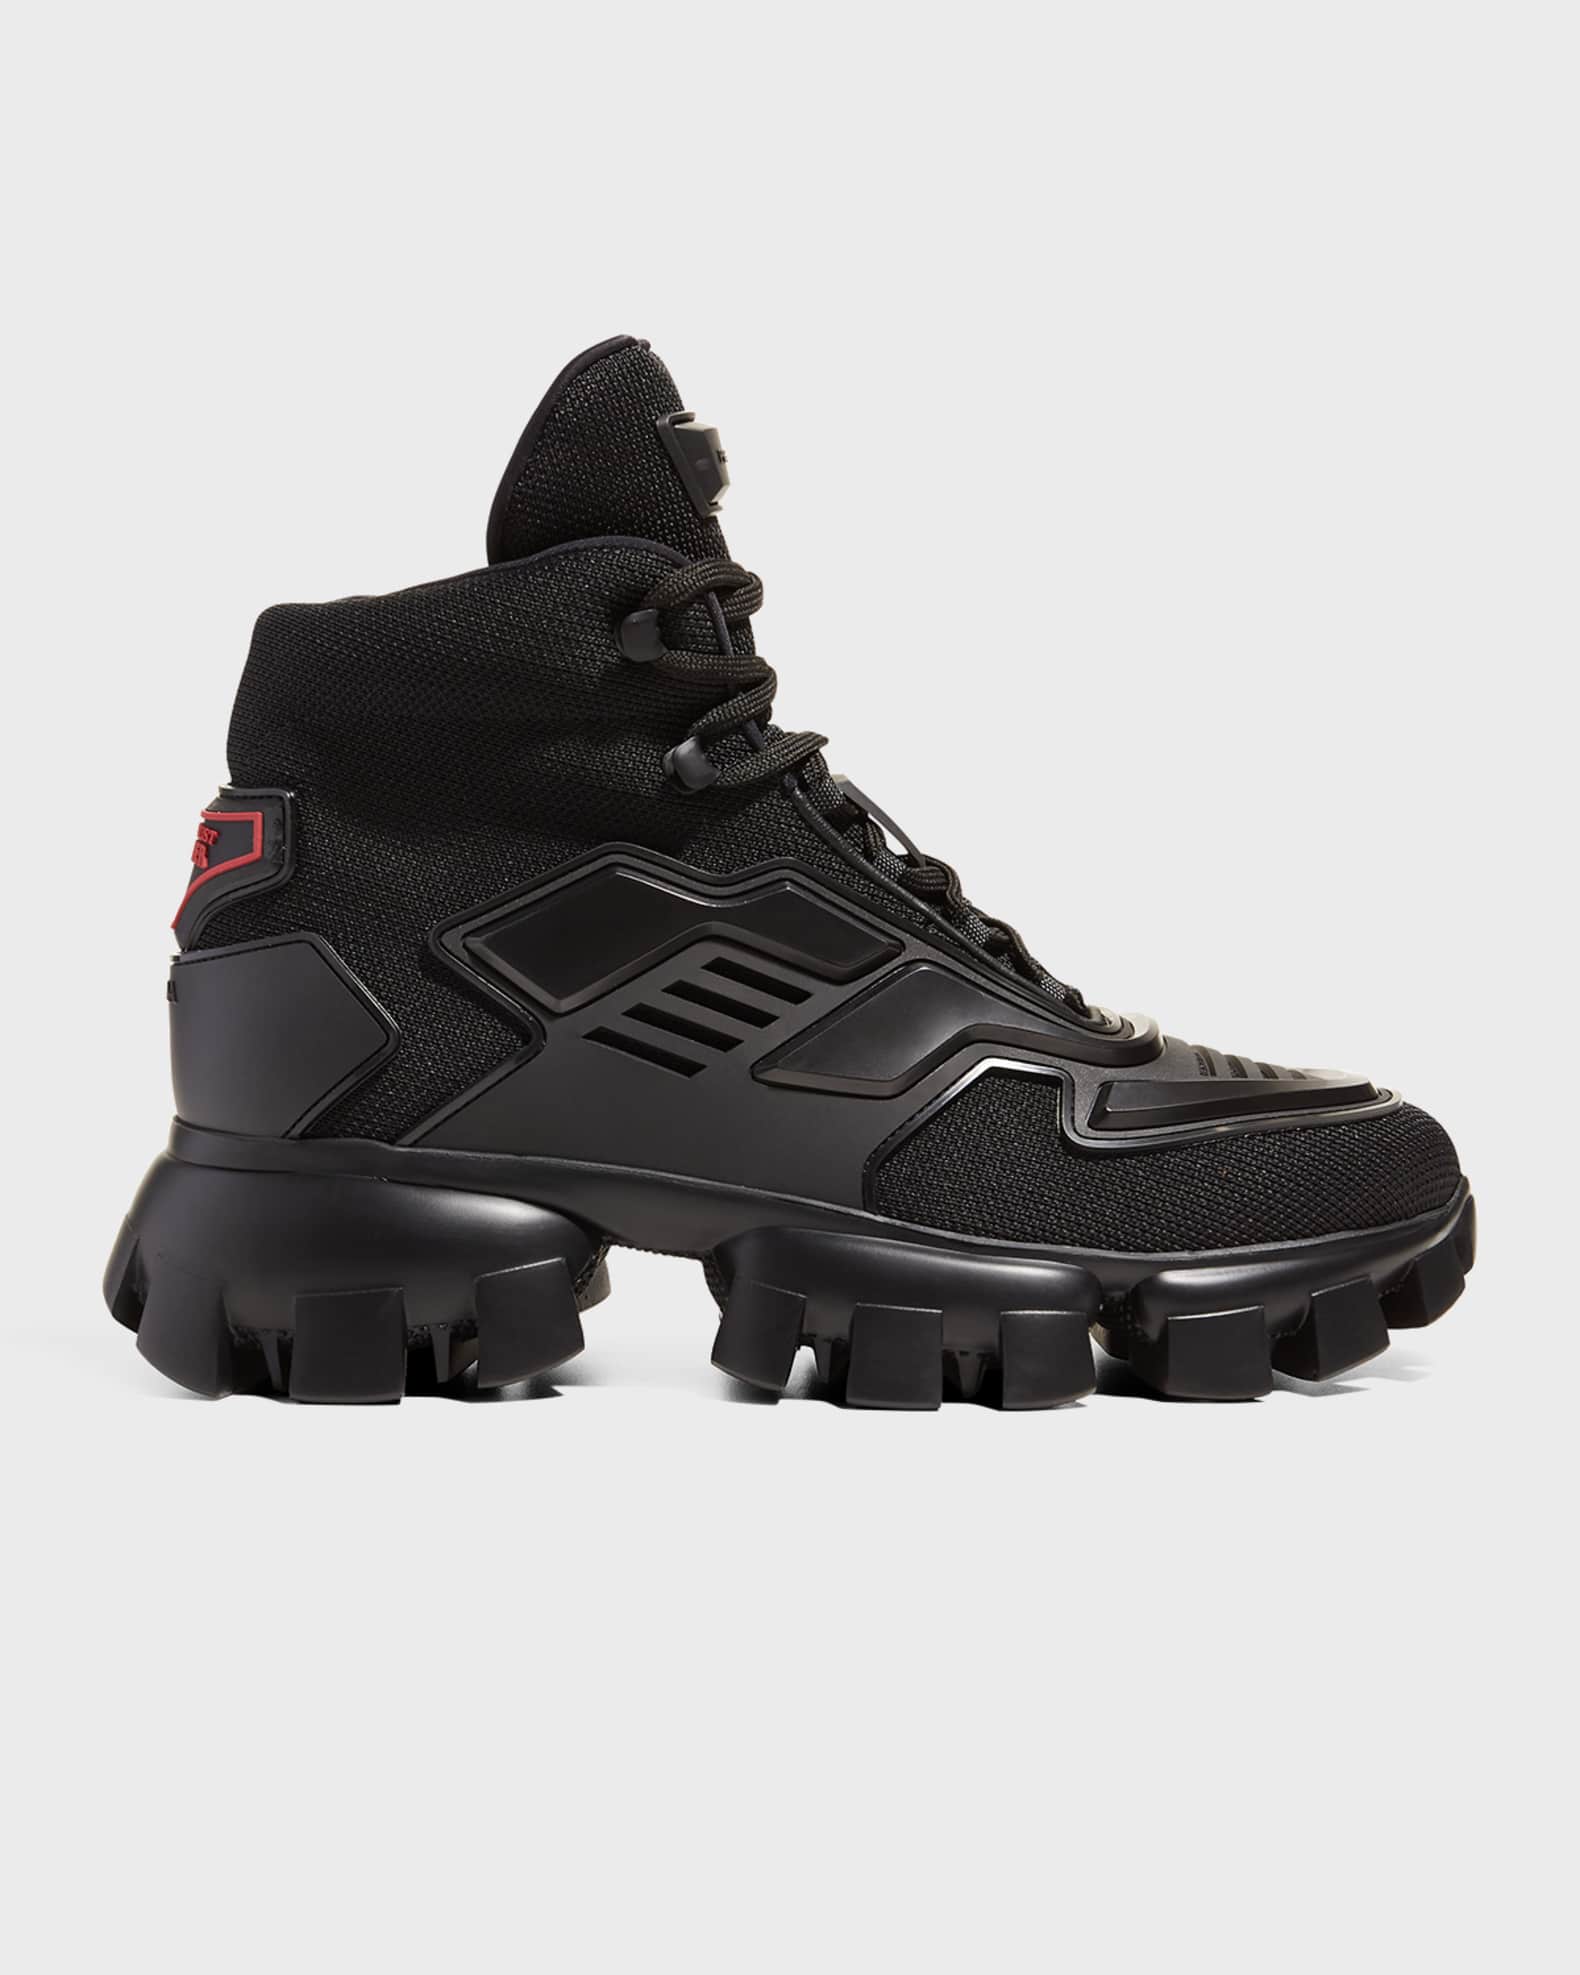 Prada Black LV Faux Leather Men's Boot Shoes